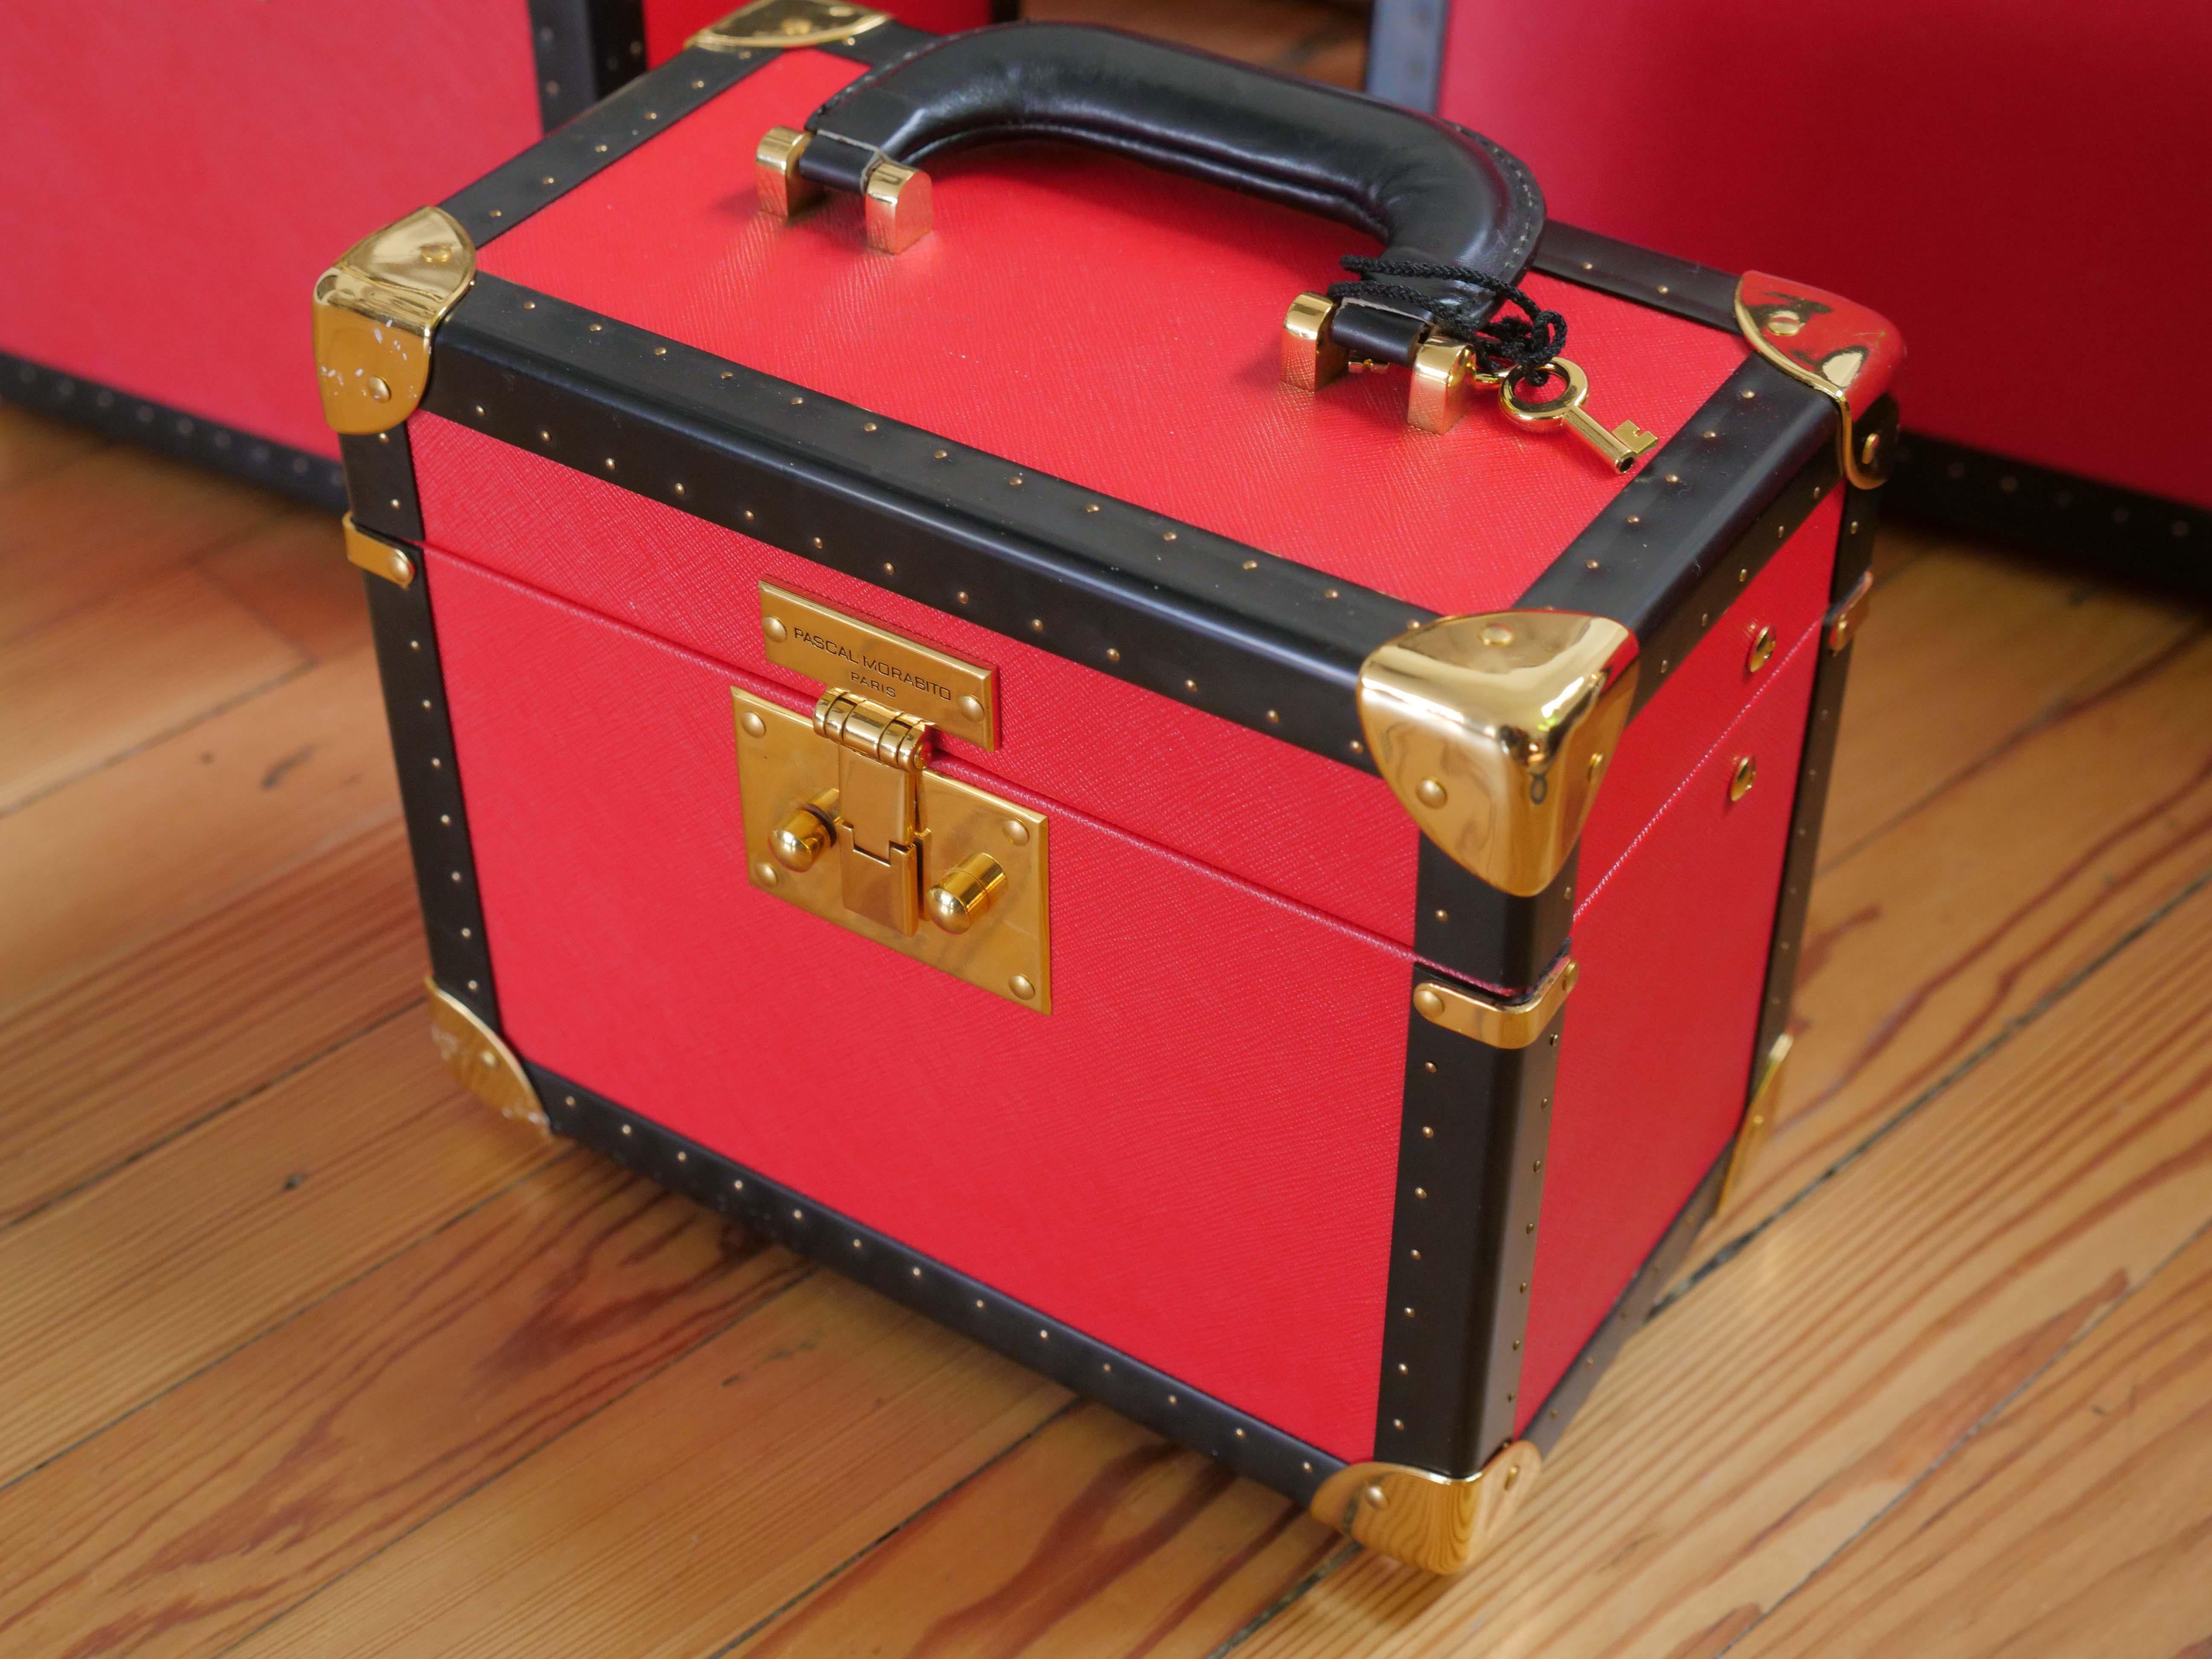 5 piece decorative hard luggage set, brass hardware and black edging.

Measures: Large rect- 36